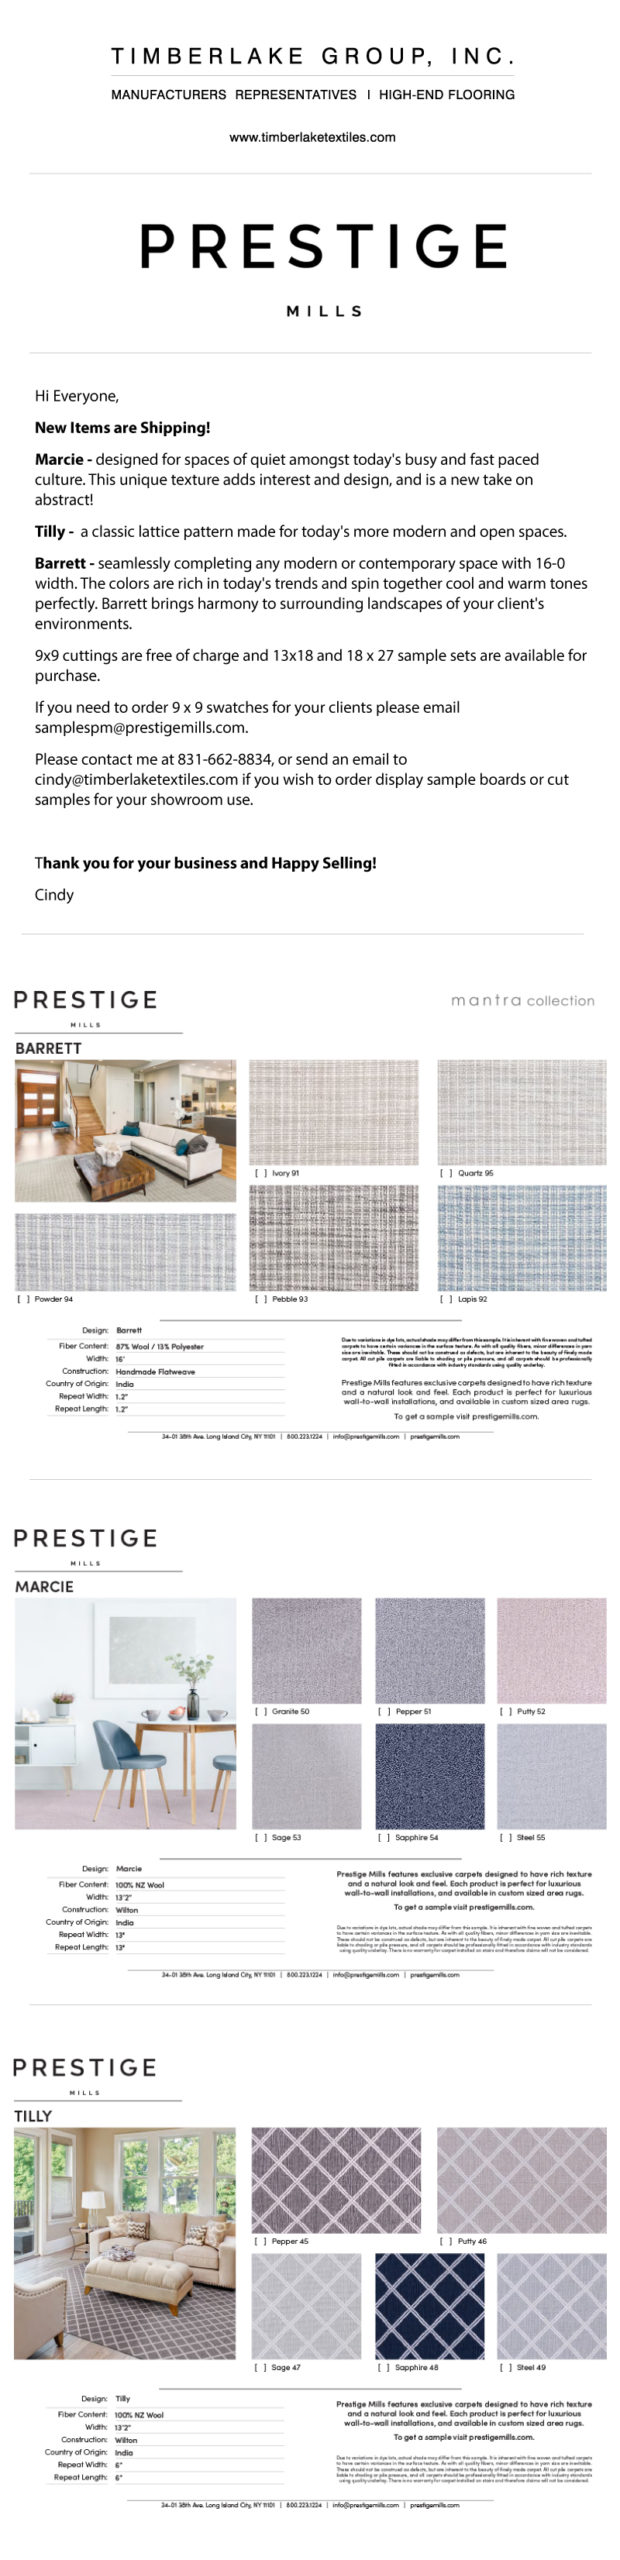 Prestige New Items Shipping image